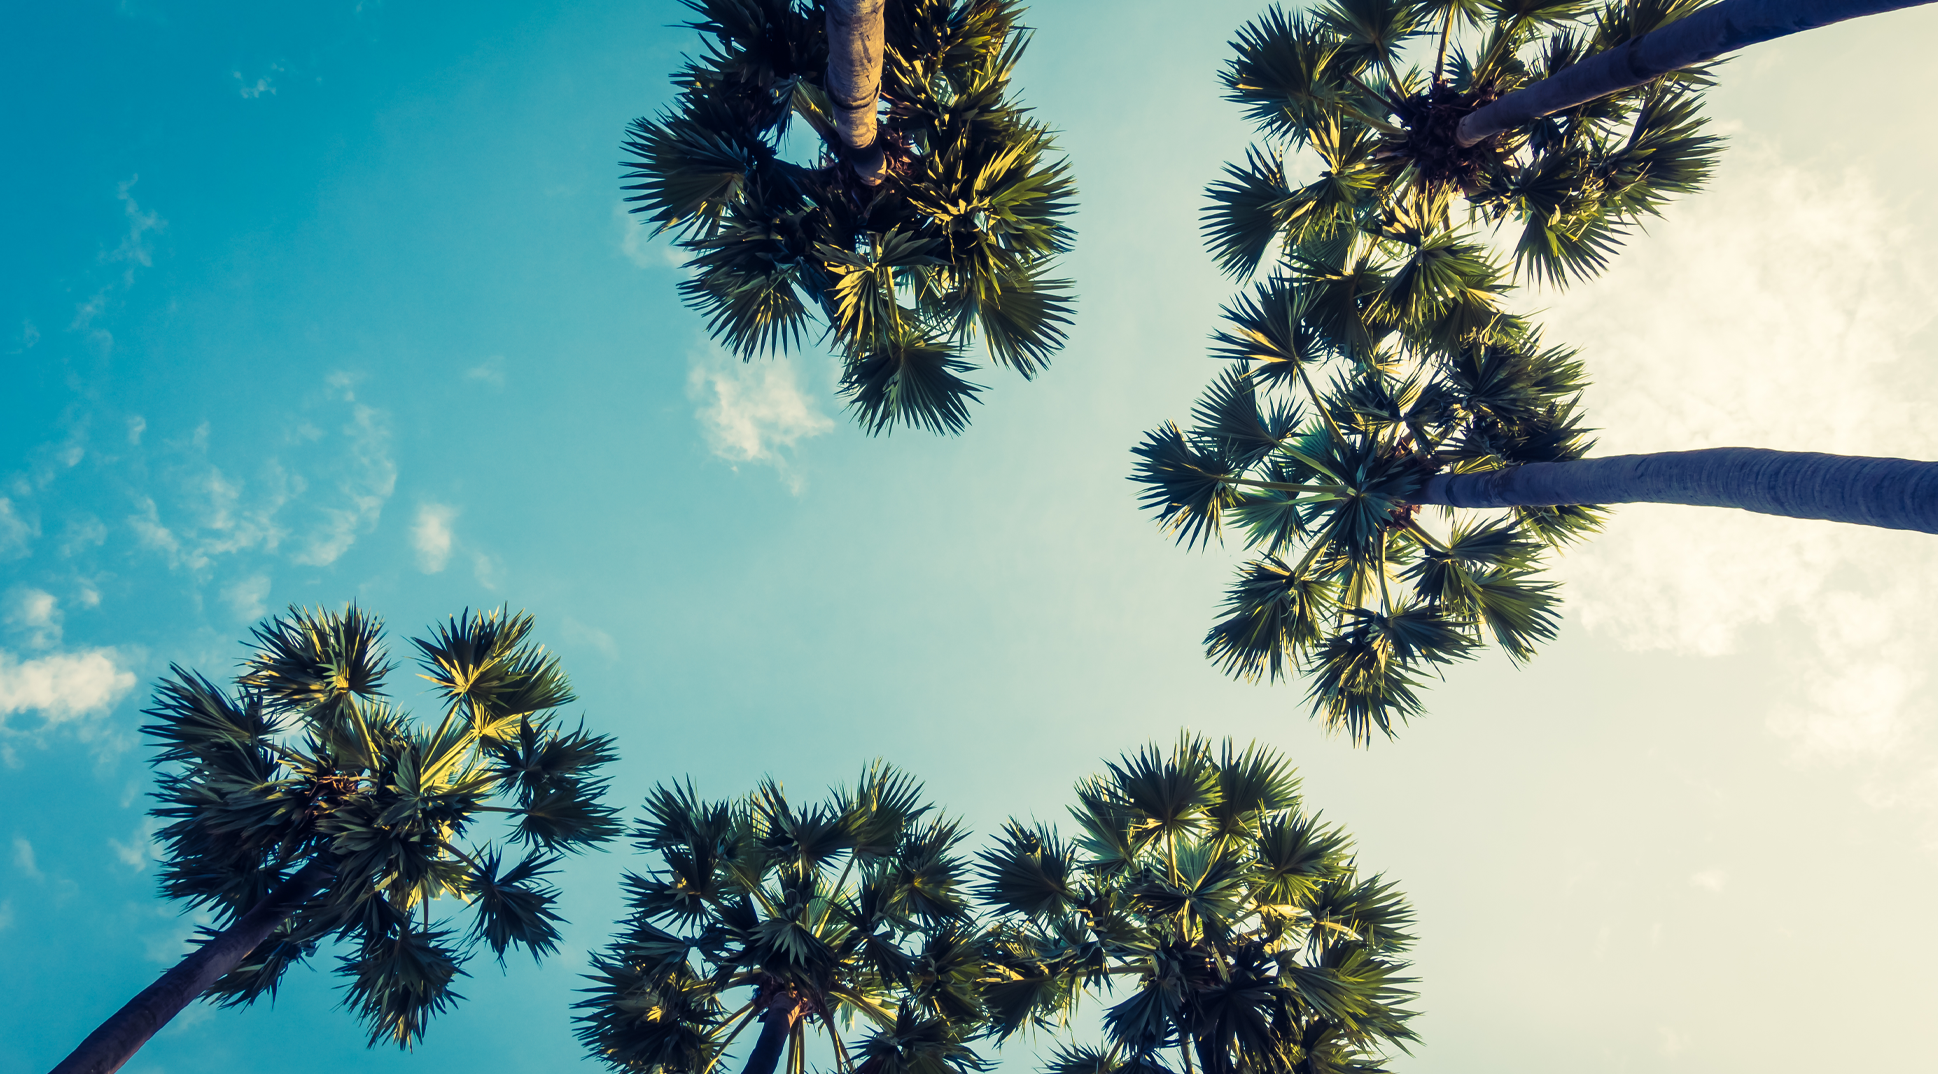 Southern California palms